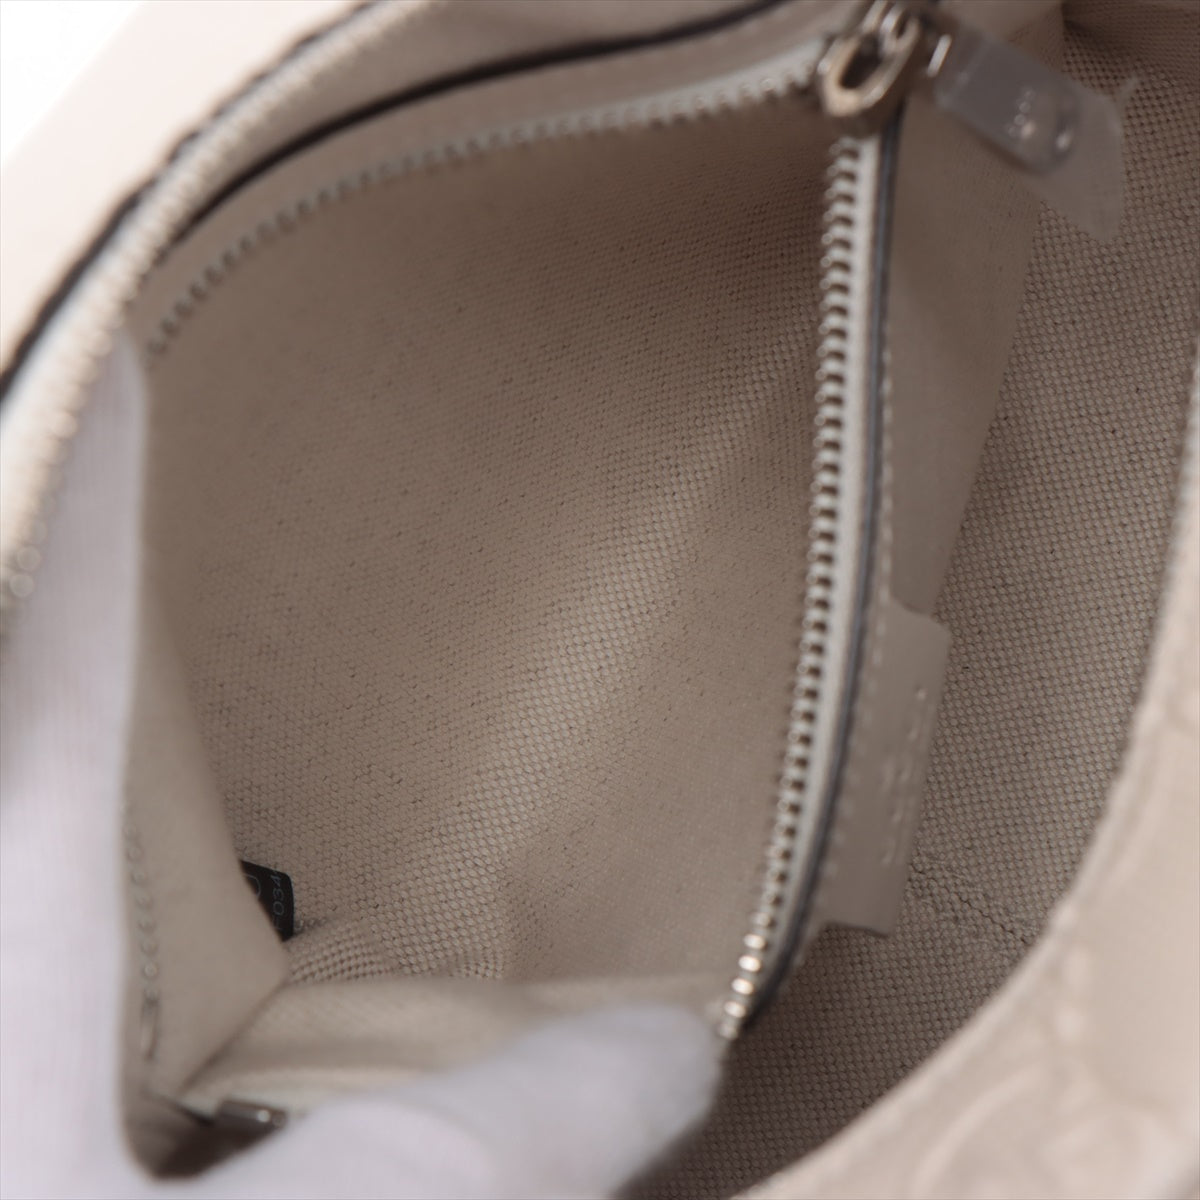 Gucci GG Embos Leather Shoulder Bag White 626363